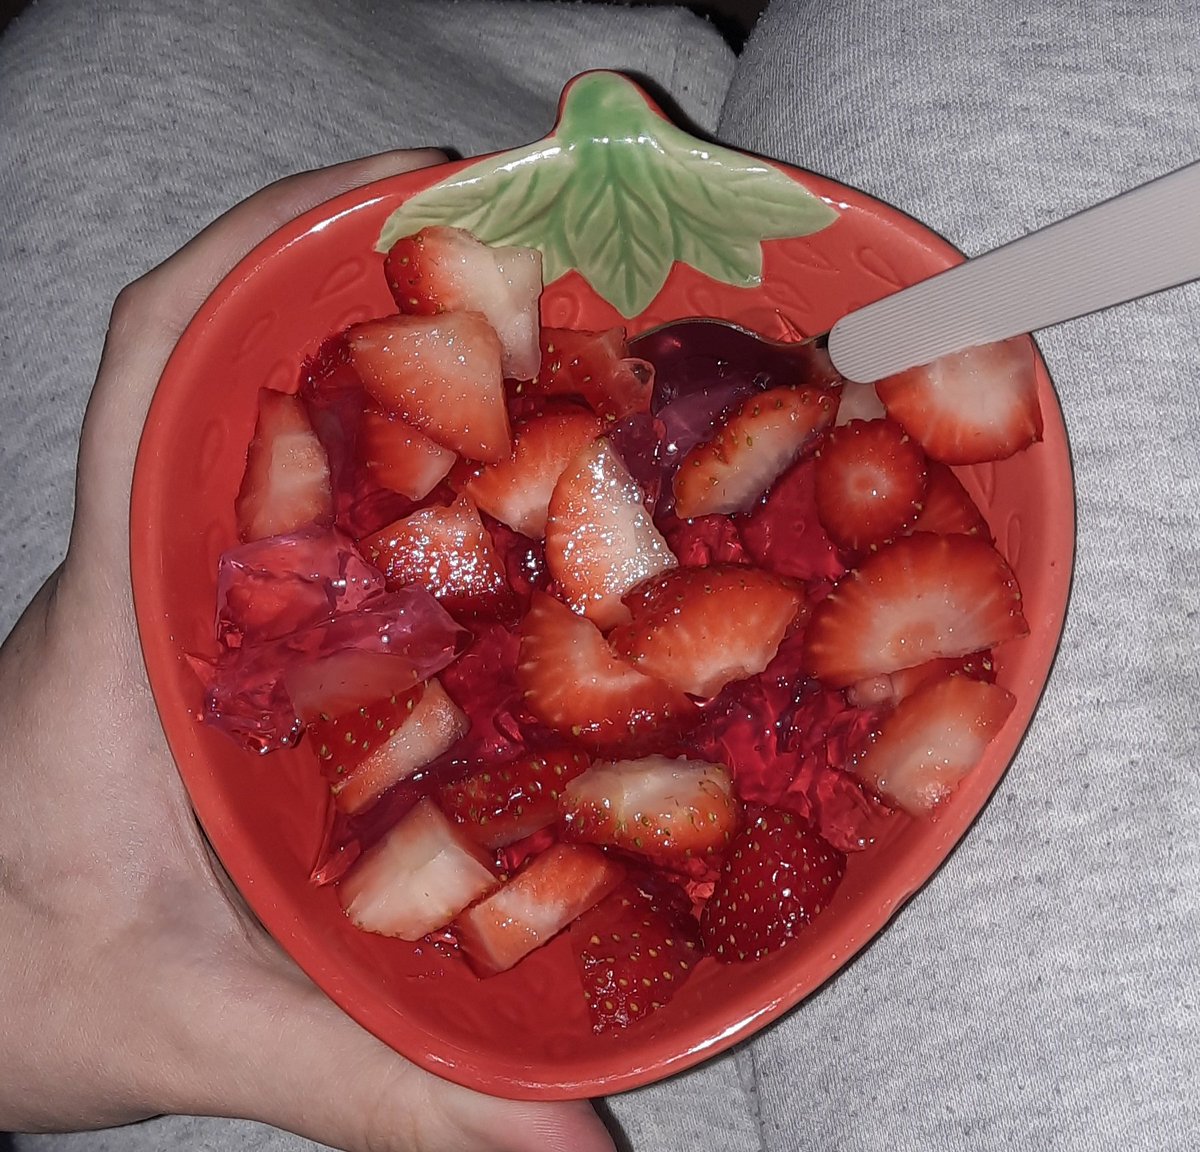 Best snack! Strawberry and calorie free jelly🍓🍮
.
#edtwt #proana #edtw #edtwtt #mealinspo #mealspo #thinspo